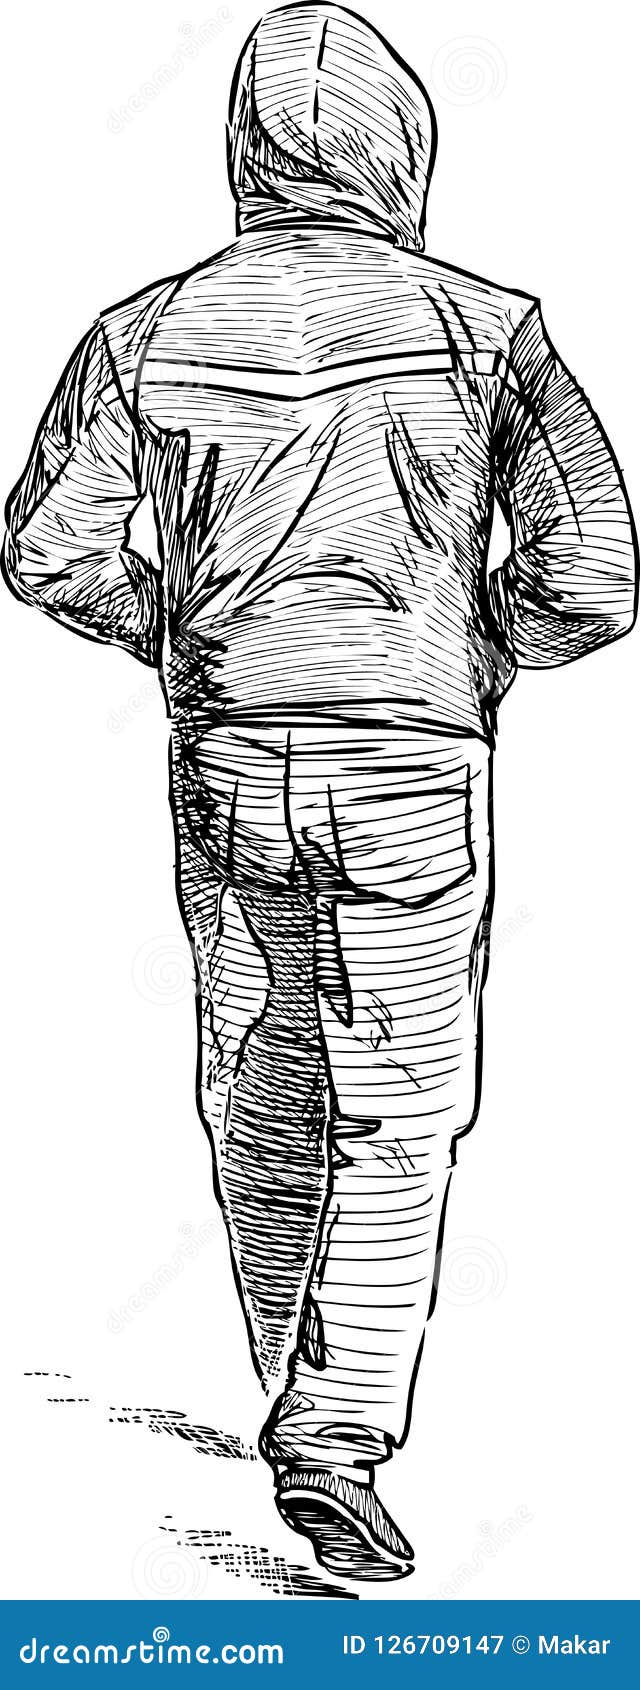 Drawing Illustration Sketch Man Suit Walking Stock Illustration 699892558 |  Shutterstock